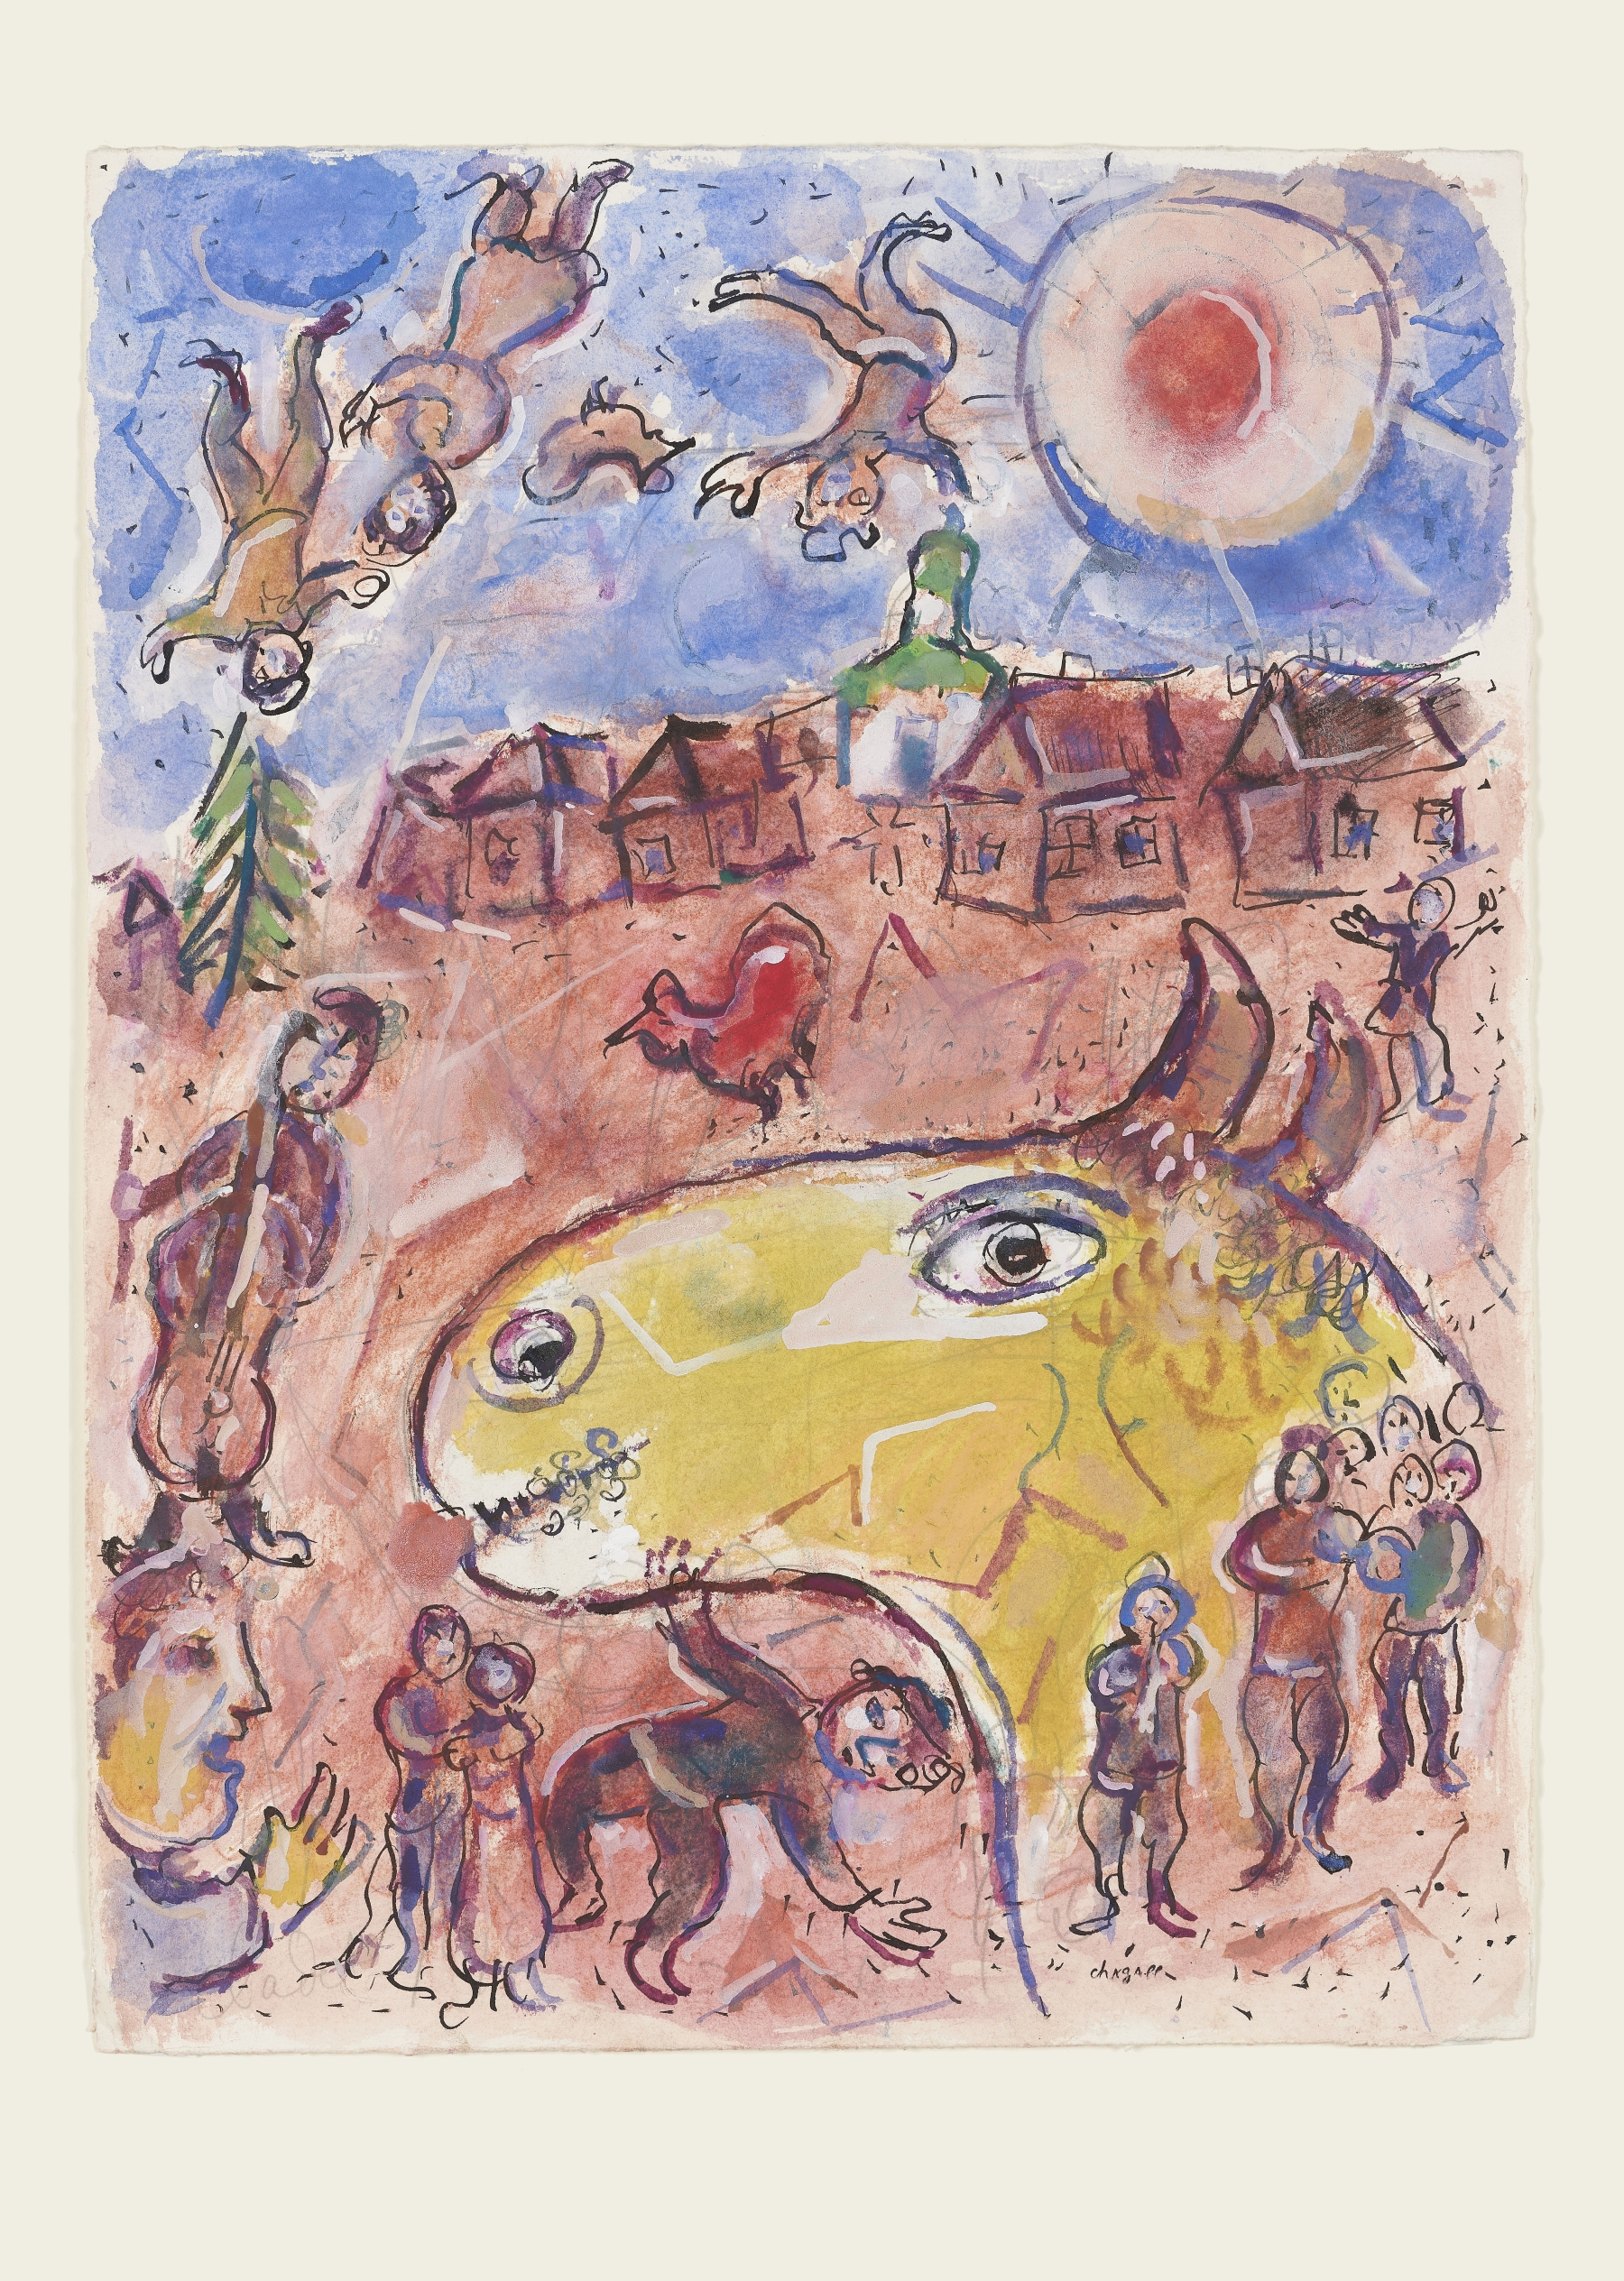 Żółty koziołek na wsi - obraz Marca Chagalla.